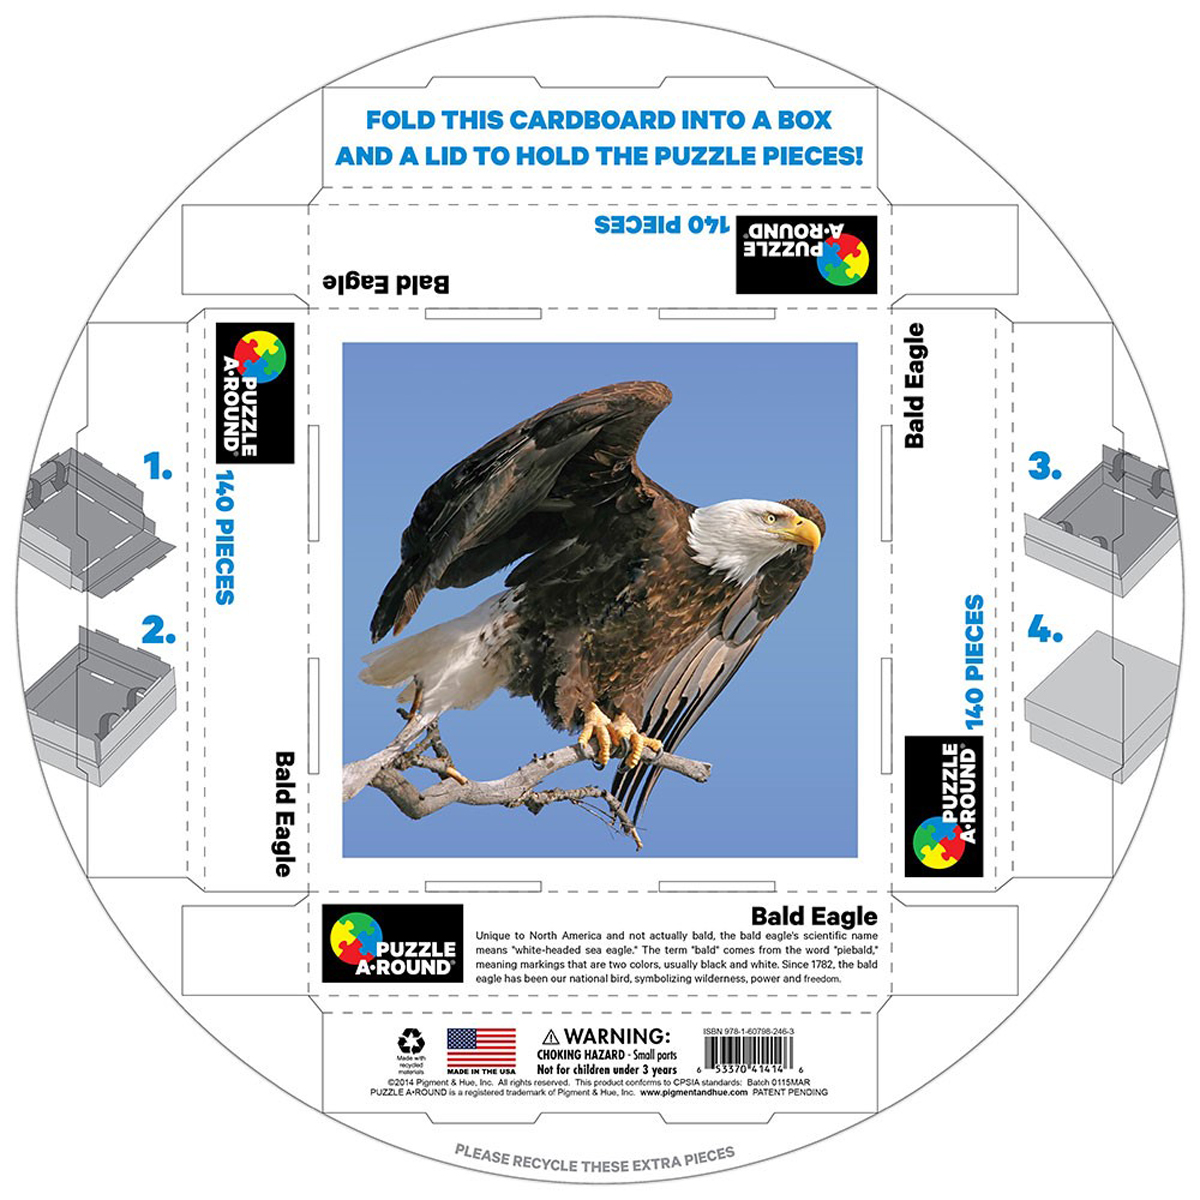 Bald Eagle Puzzle A•Round: